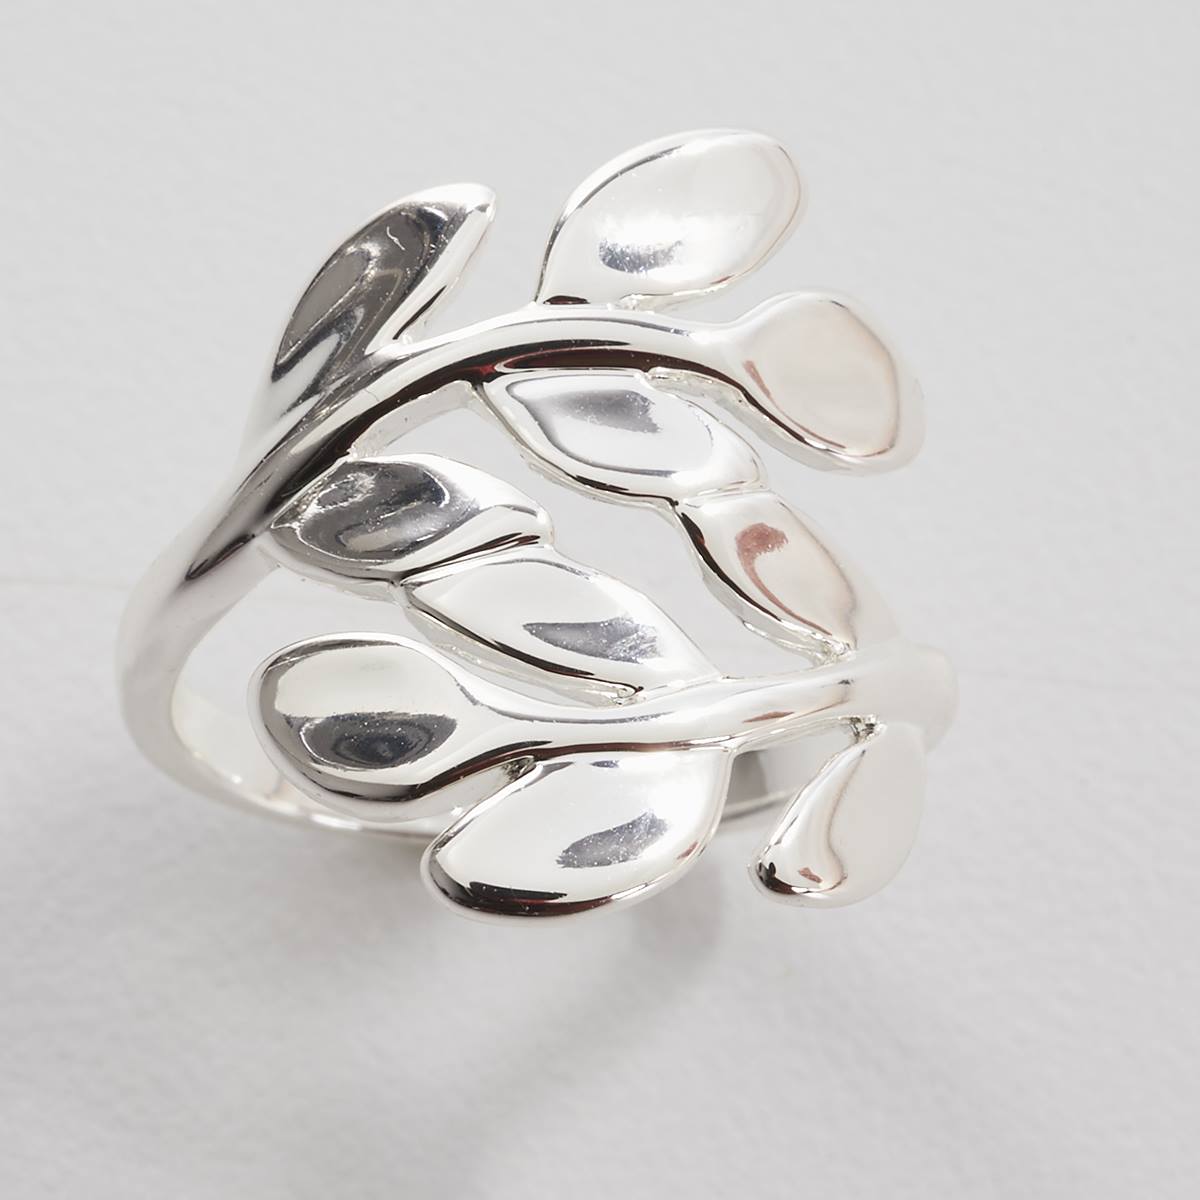 Ashley Cooper(tm) Silver Open Leaf Wrap Ring